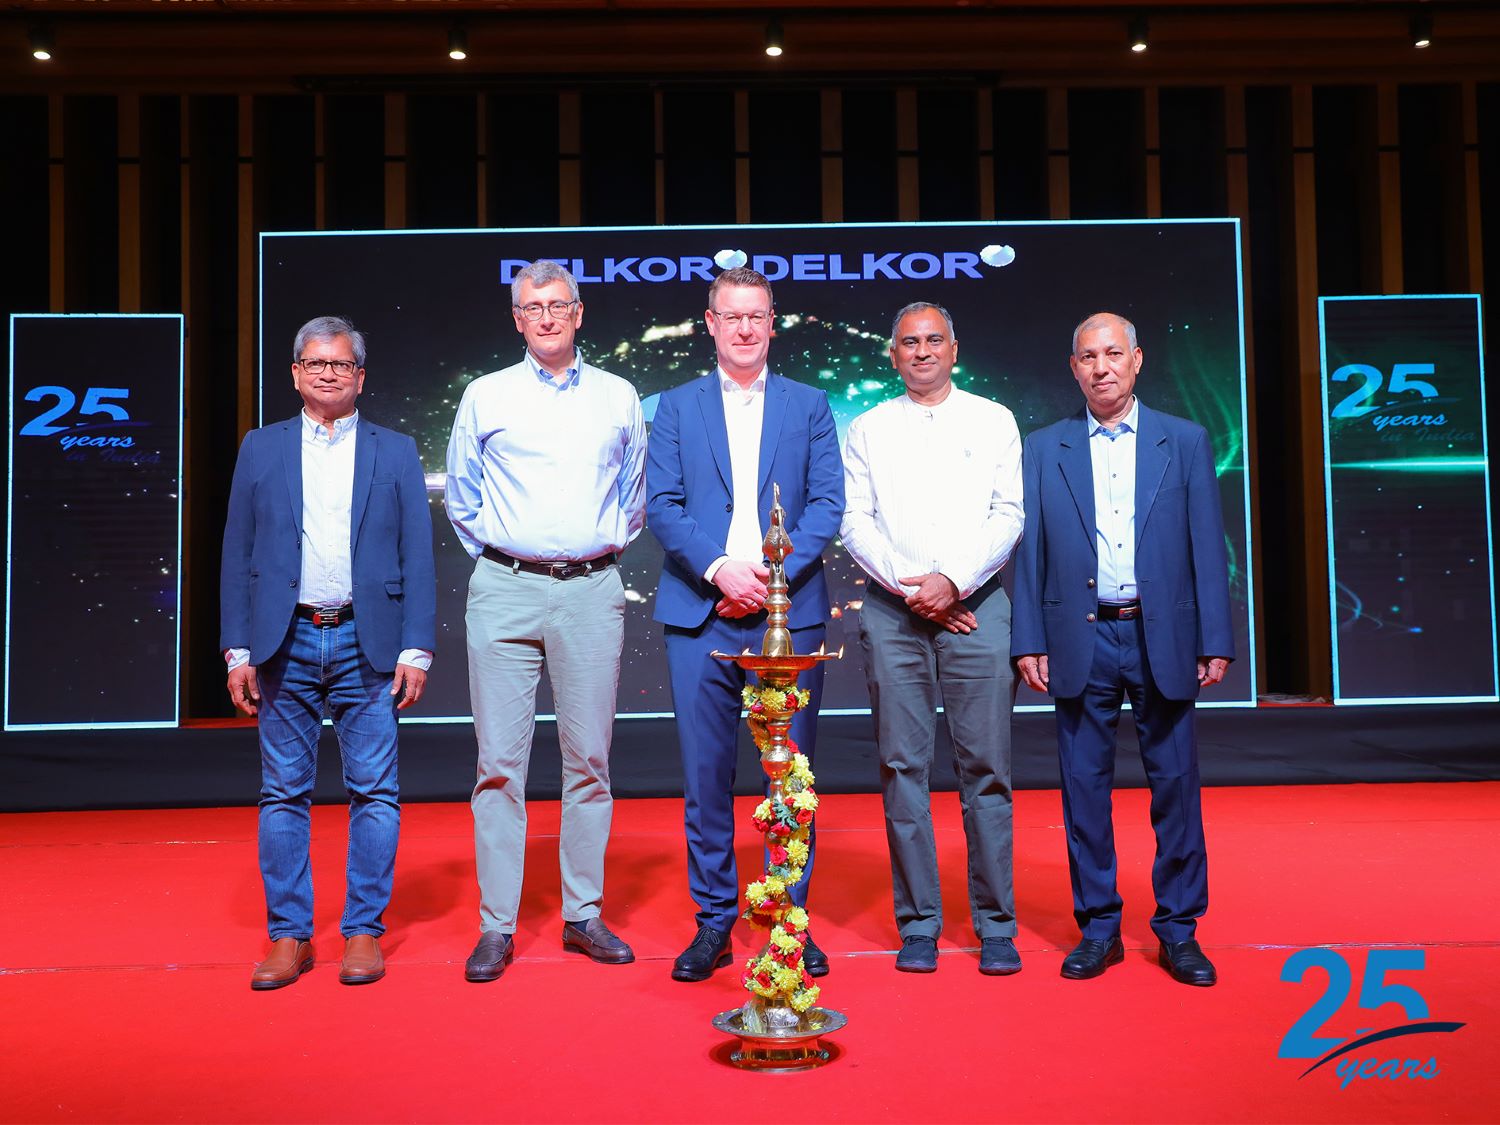 The picture shows Mr. Gopal Kalyanakrishna, Managing Director, TAKRAF India, Mr. Massimo Valsecchi (TAKRAF Group CFO), Mr. Thomas Jabs (TAKRAF Group CEO), Rajagopalan Ramanathan (Managing Director and CFO TAKRAF India) and Indu Bhushan Jha Managing Director DELKOR India).